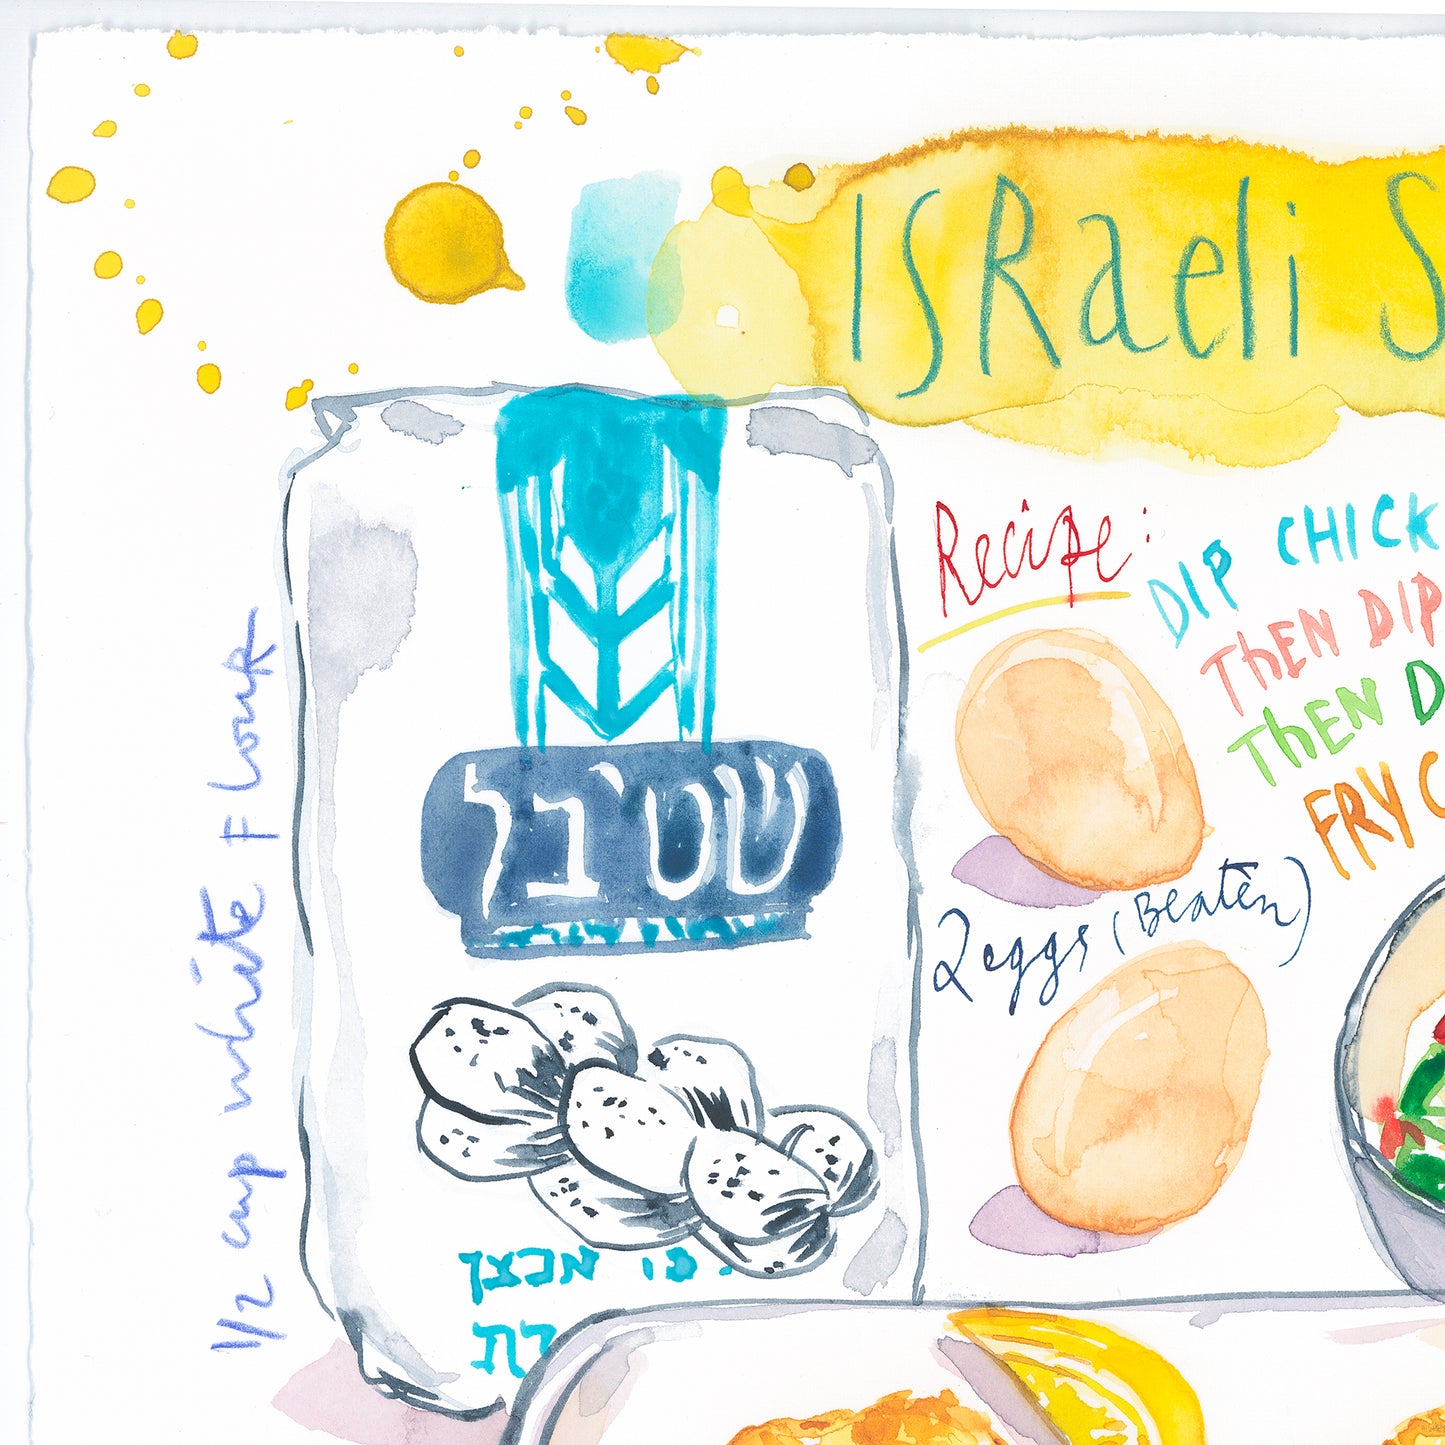 Israeli Schnitzel recipe. Original watercolor painting